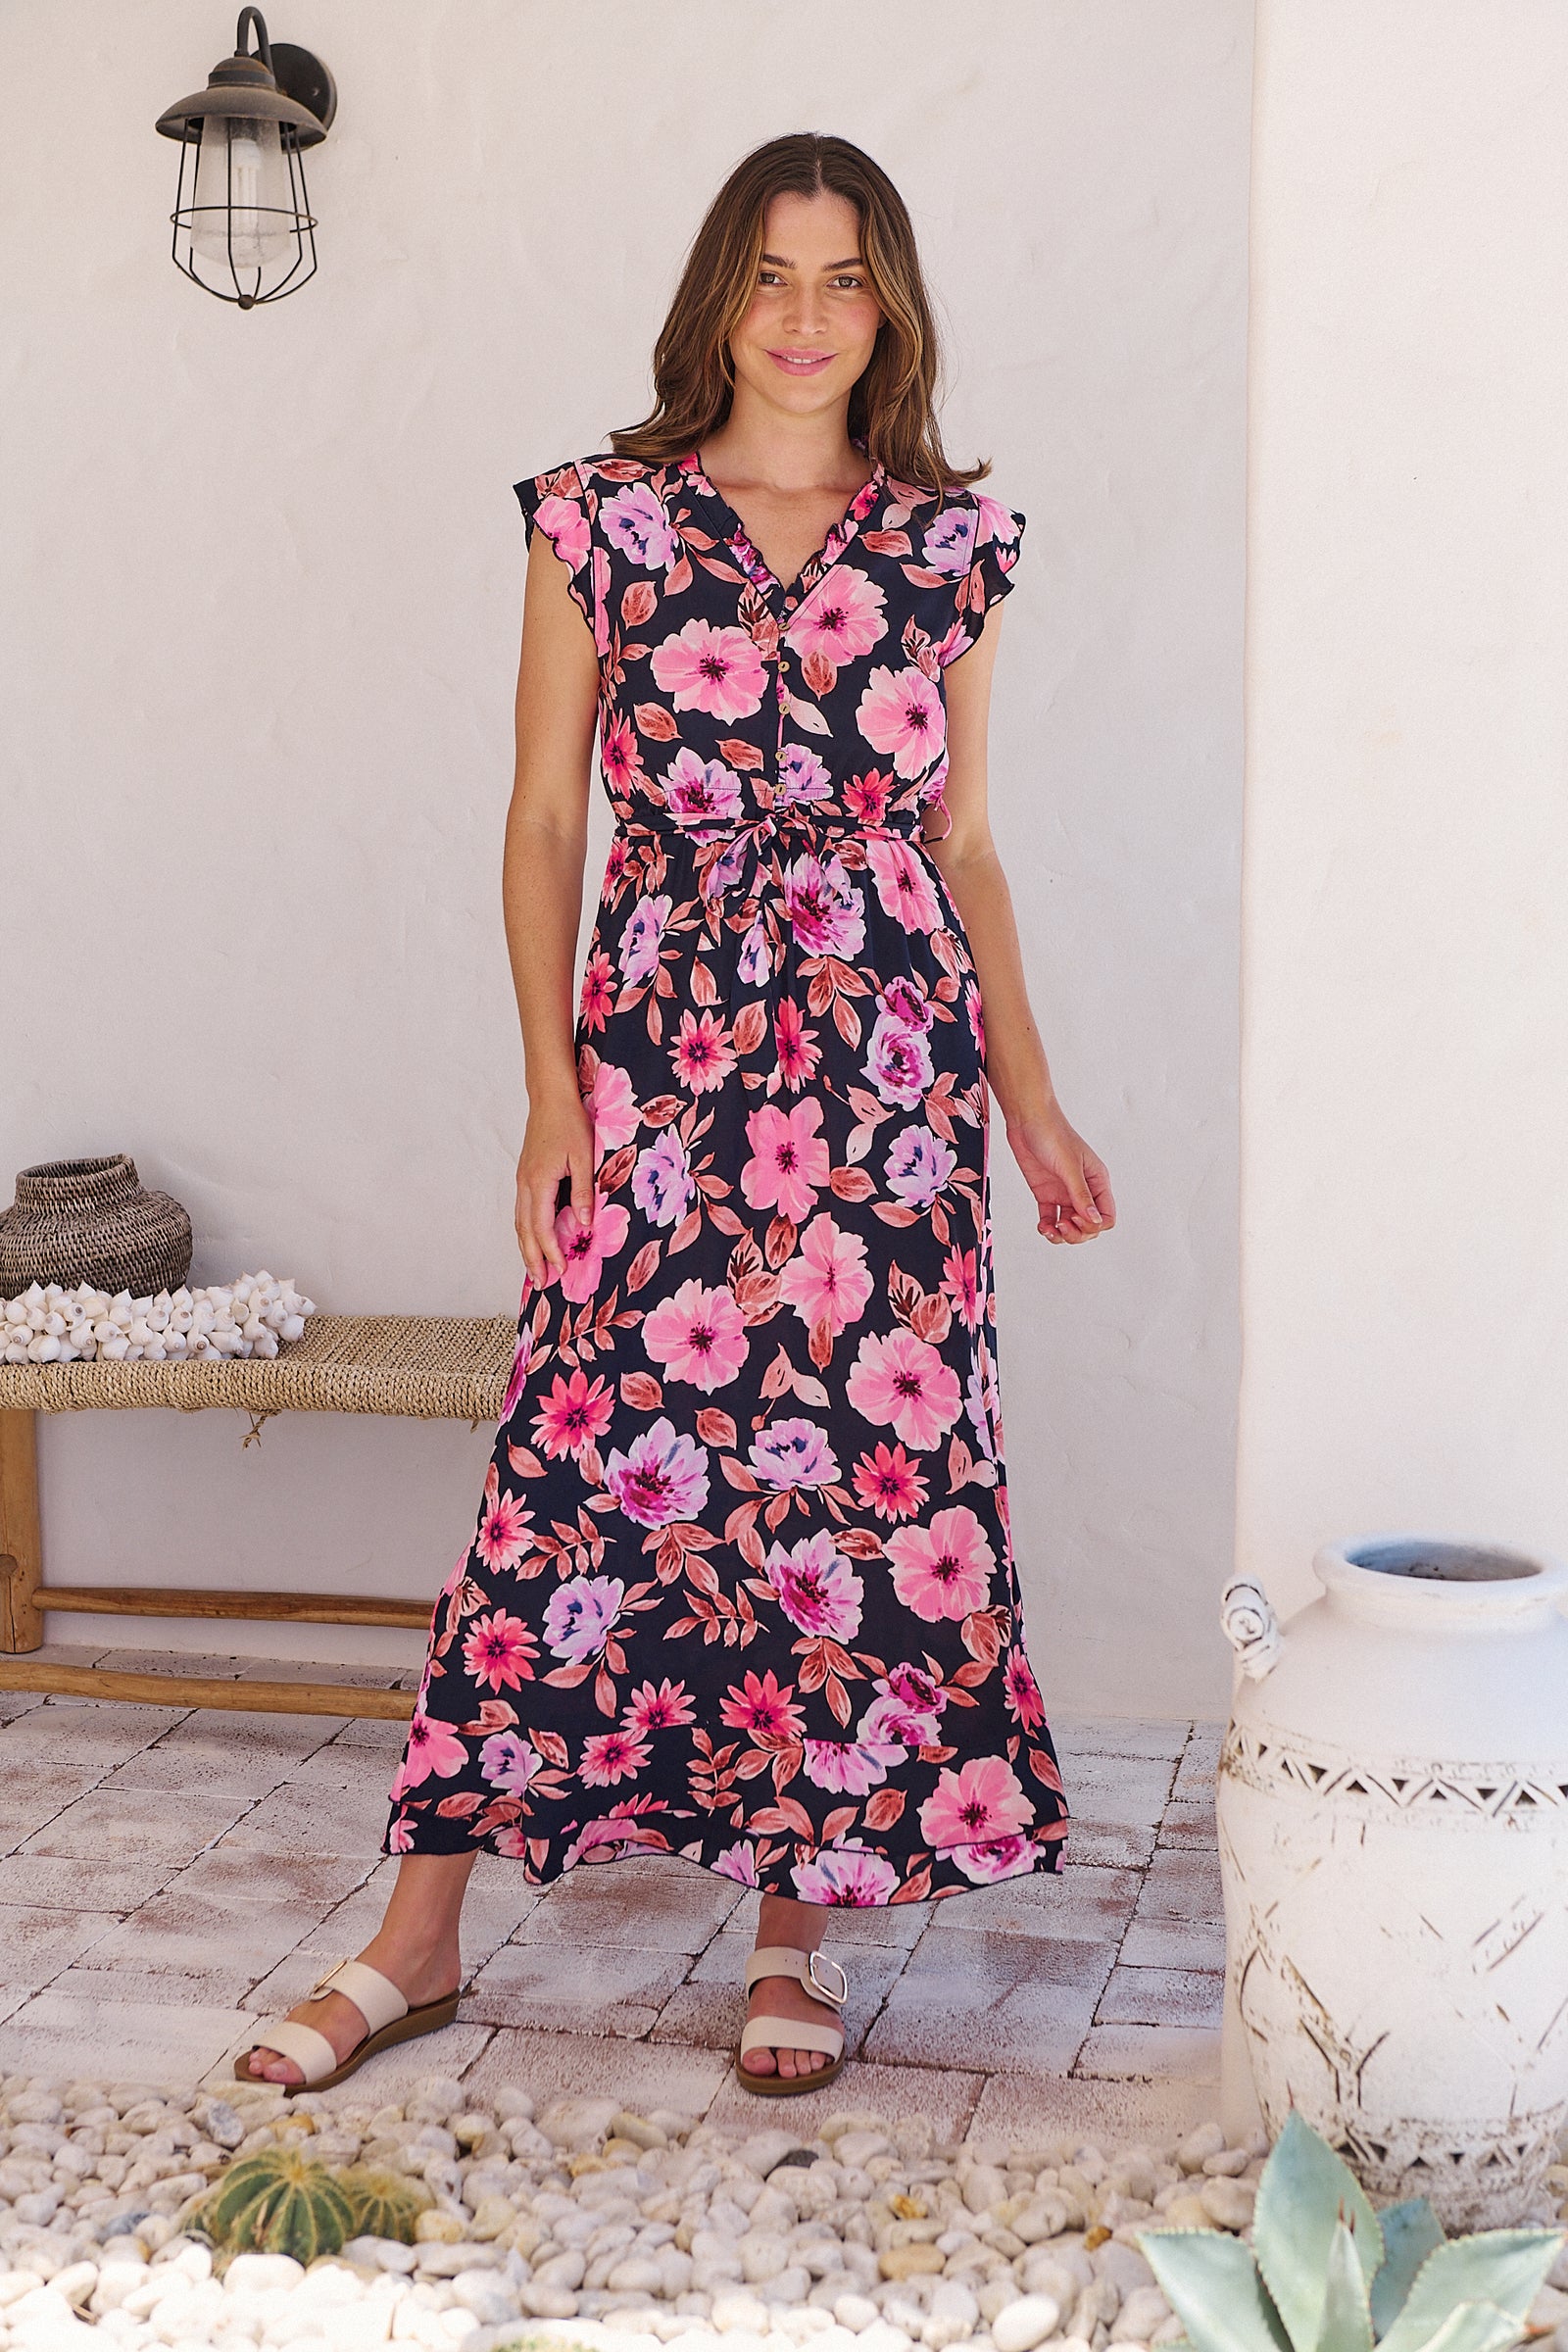 Trissa Navy/Pink Floral Print Dress